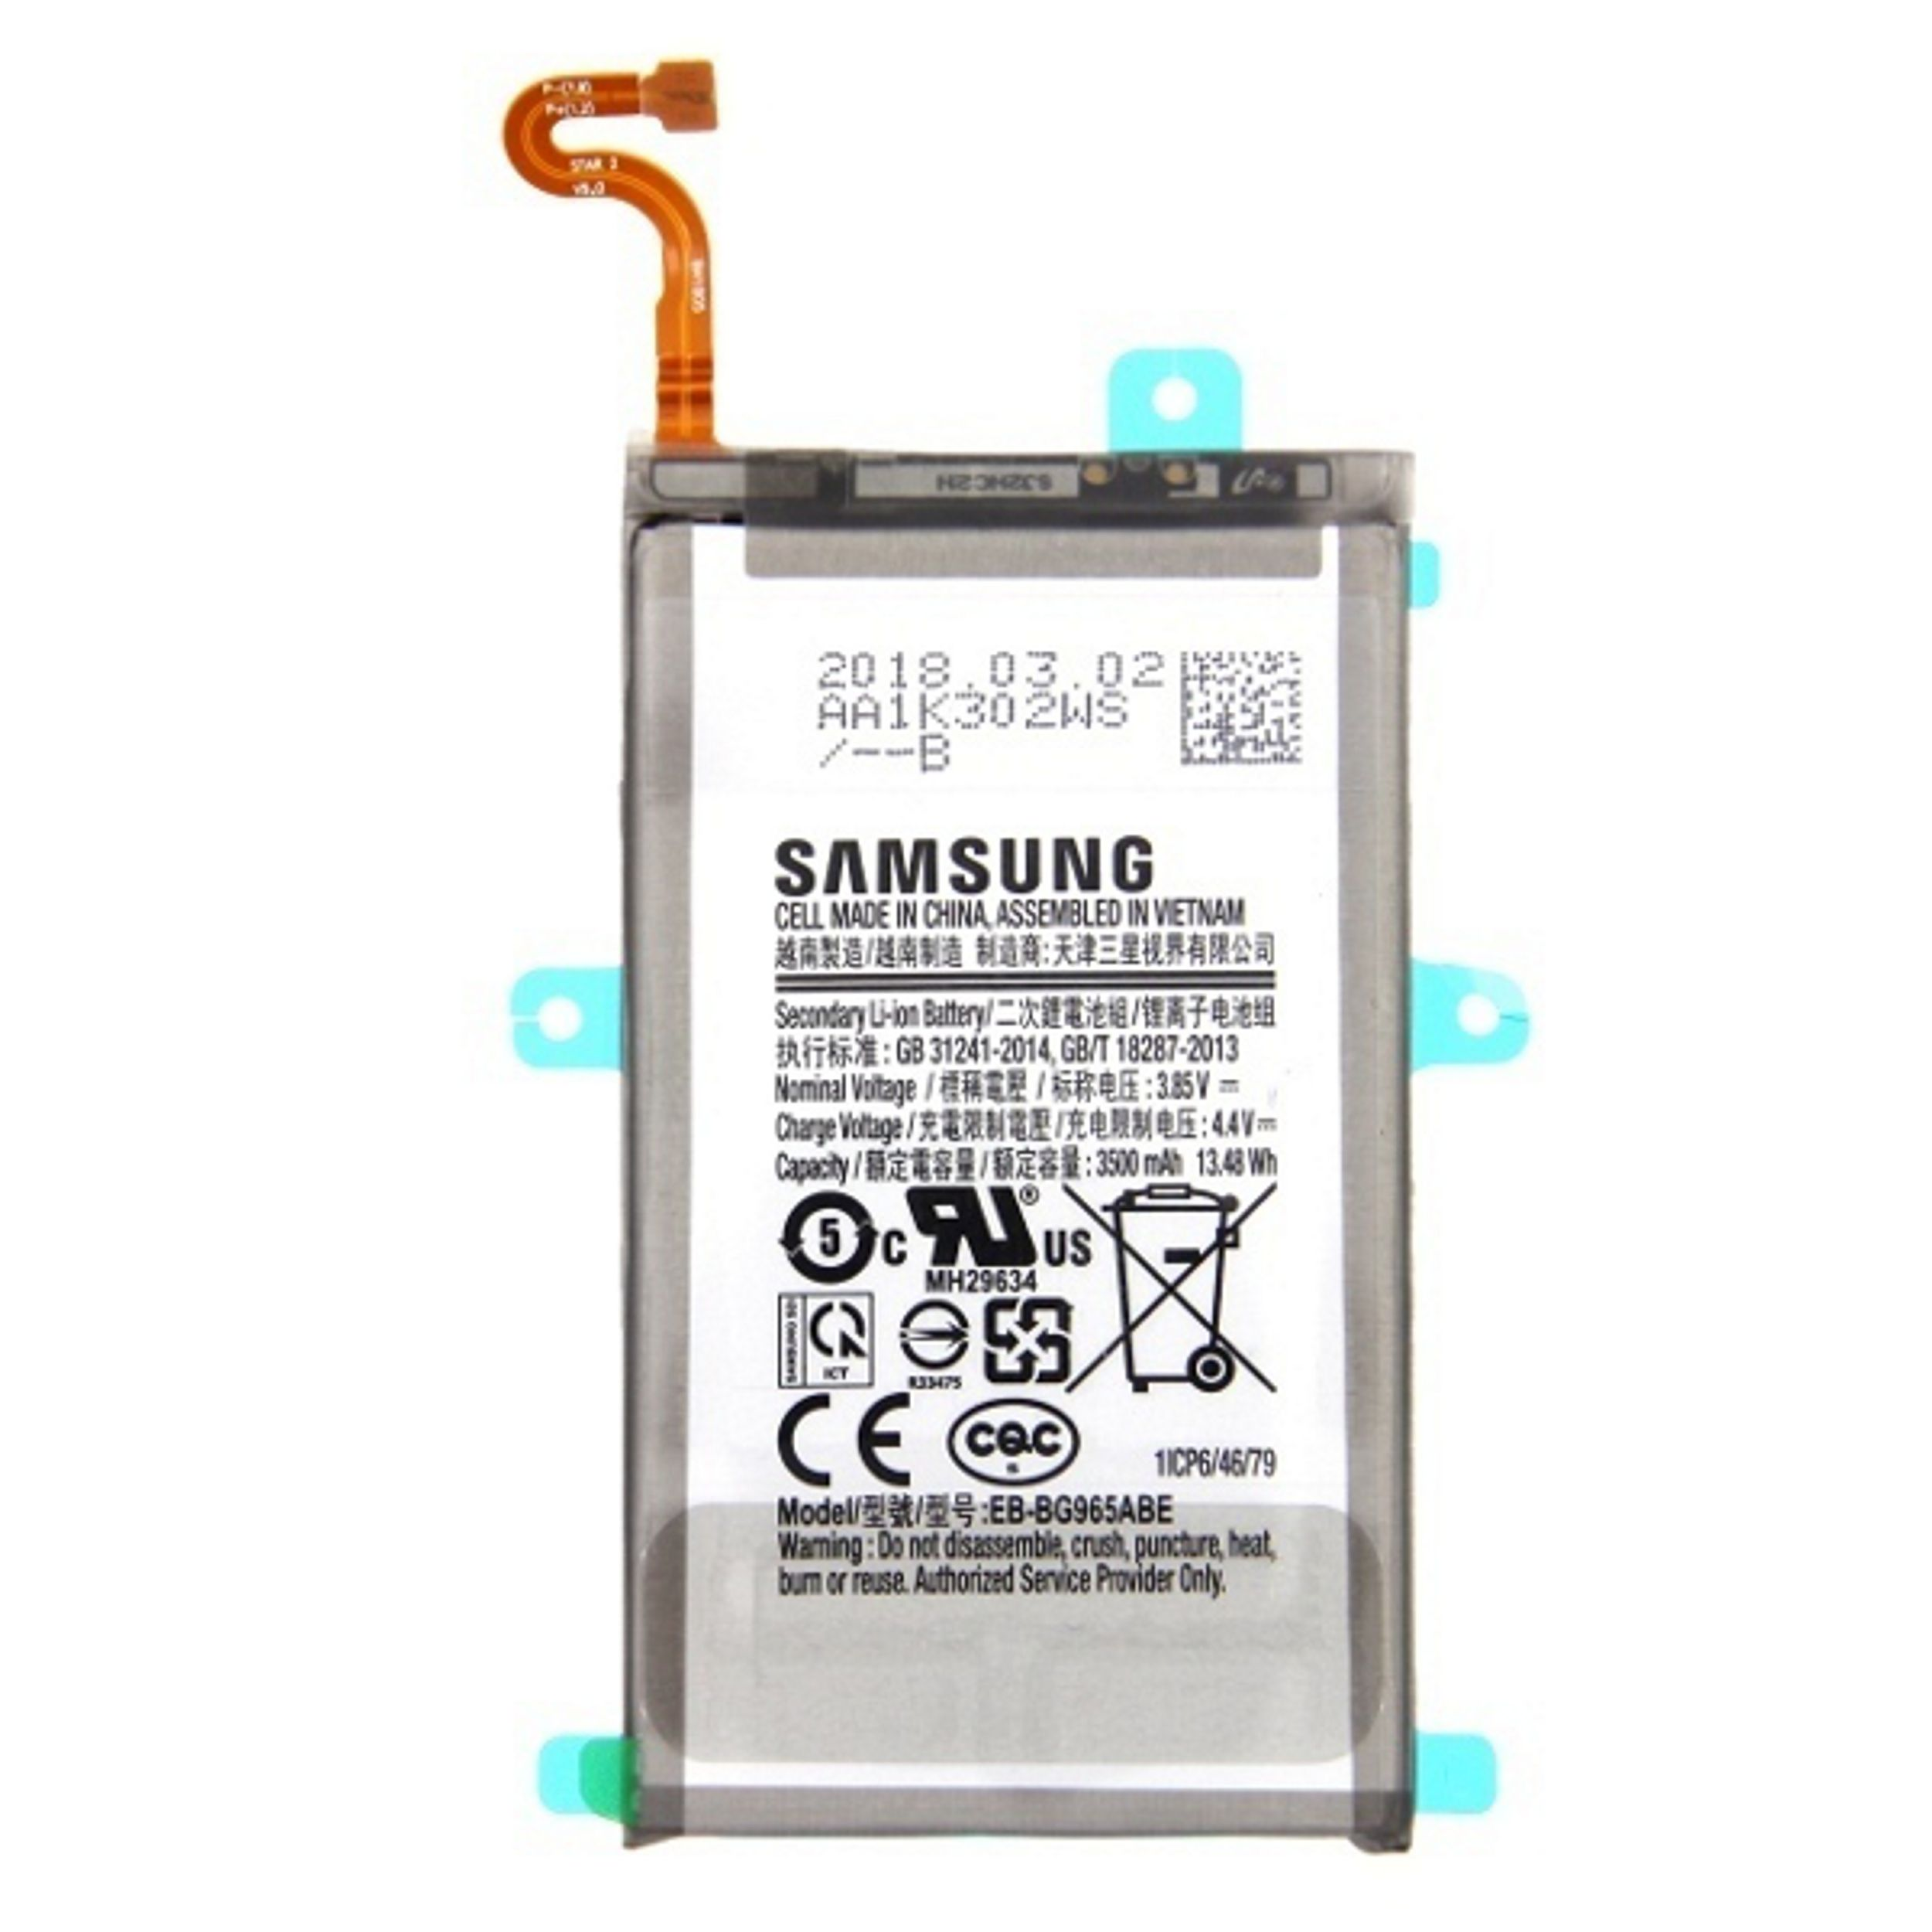 Samsung 3.85 Volt, Li-Ion, für mAh Li-Ion Akku 3500 Handy-/Smartphoneakku, SAMSUNG Original EB-BG965